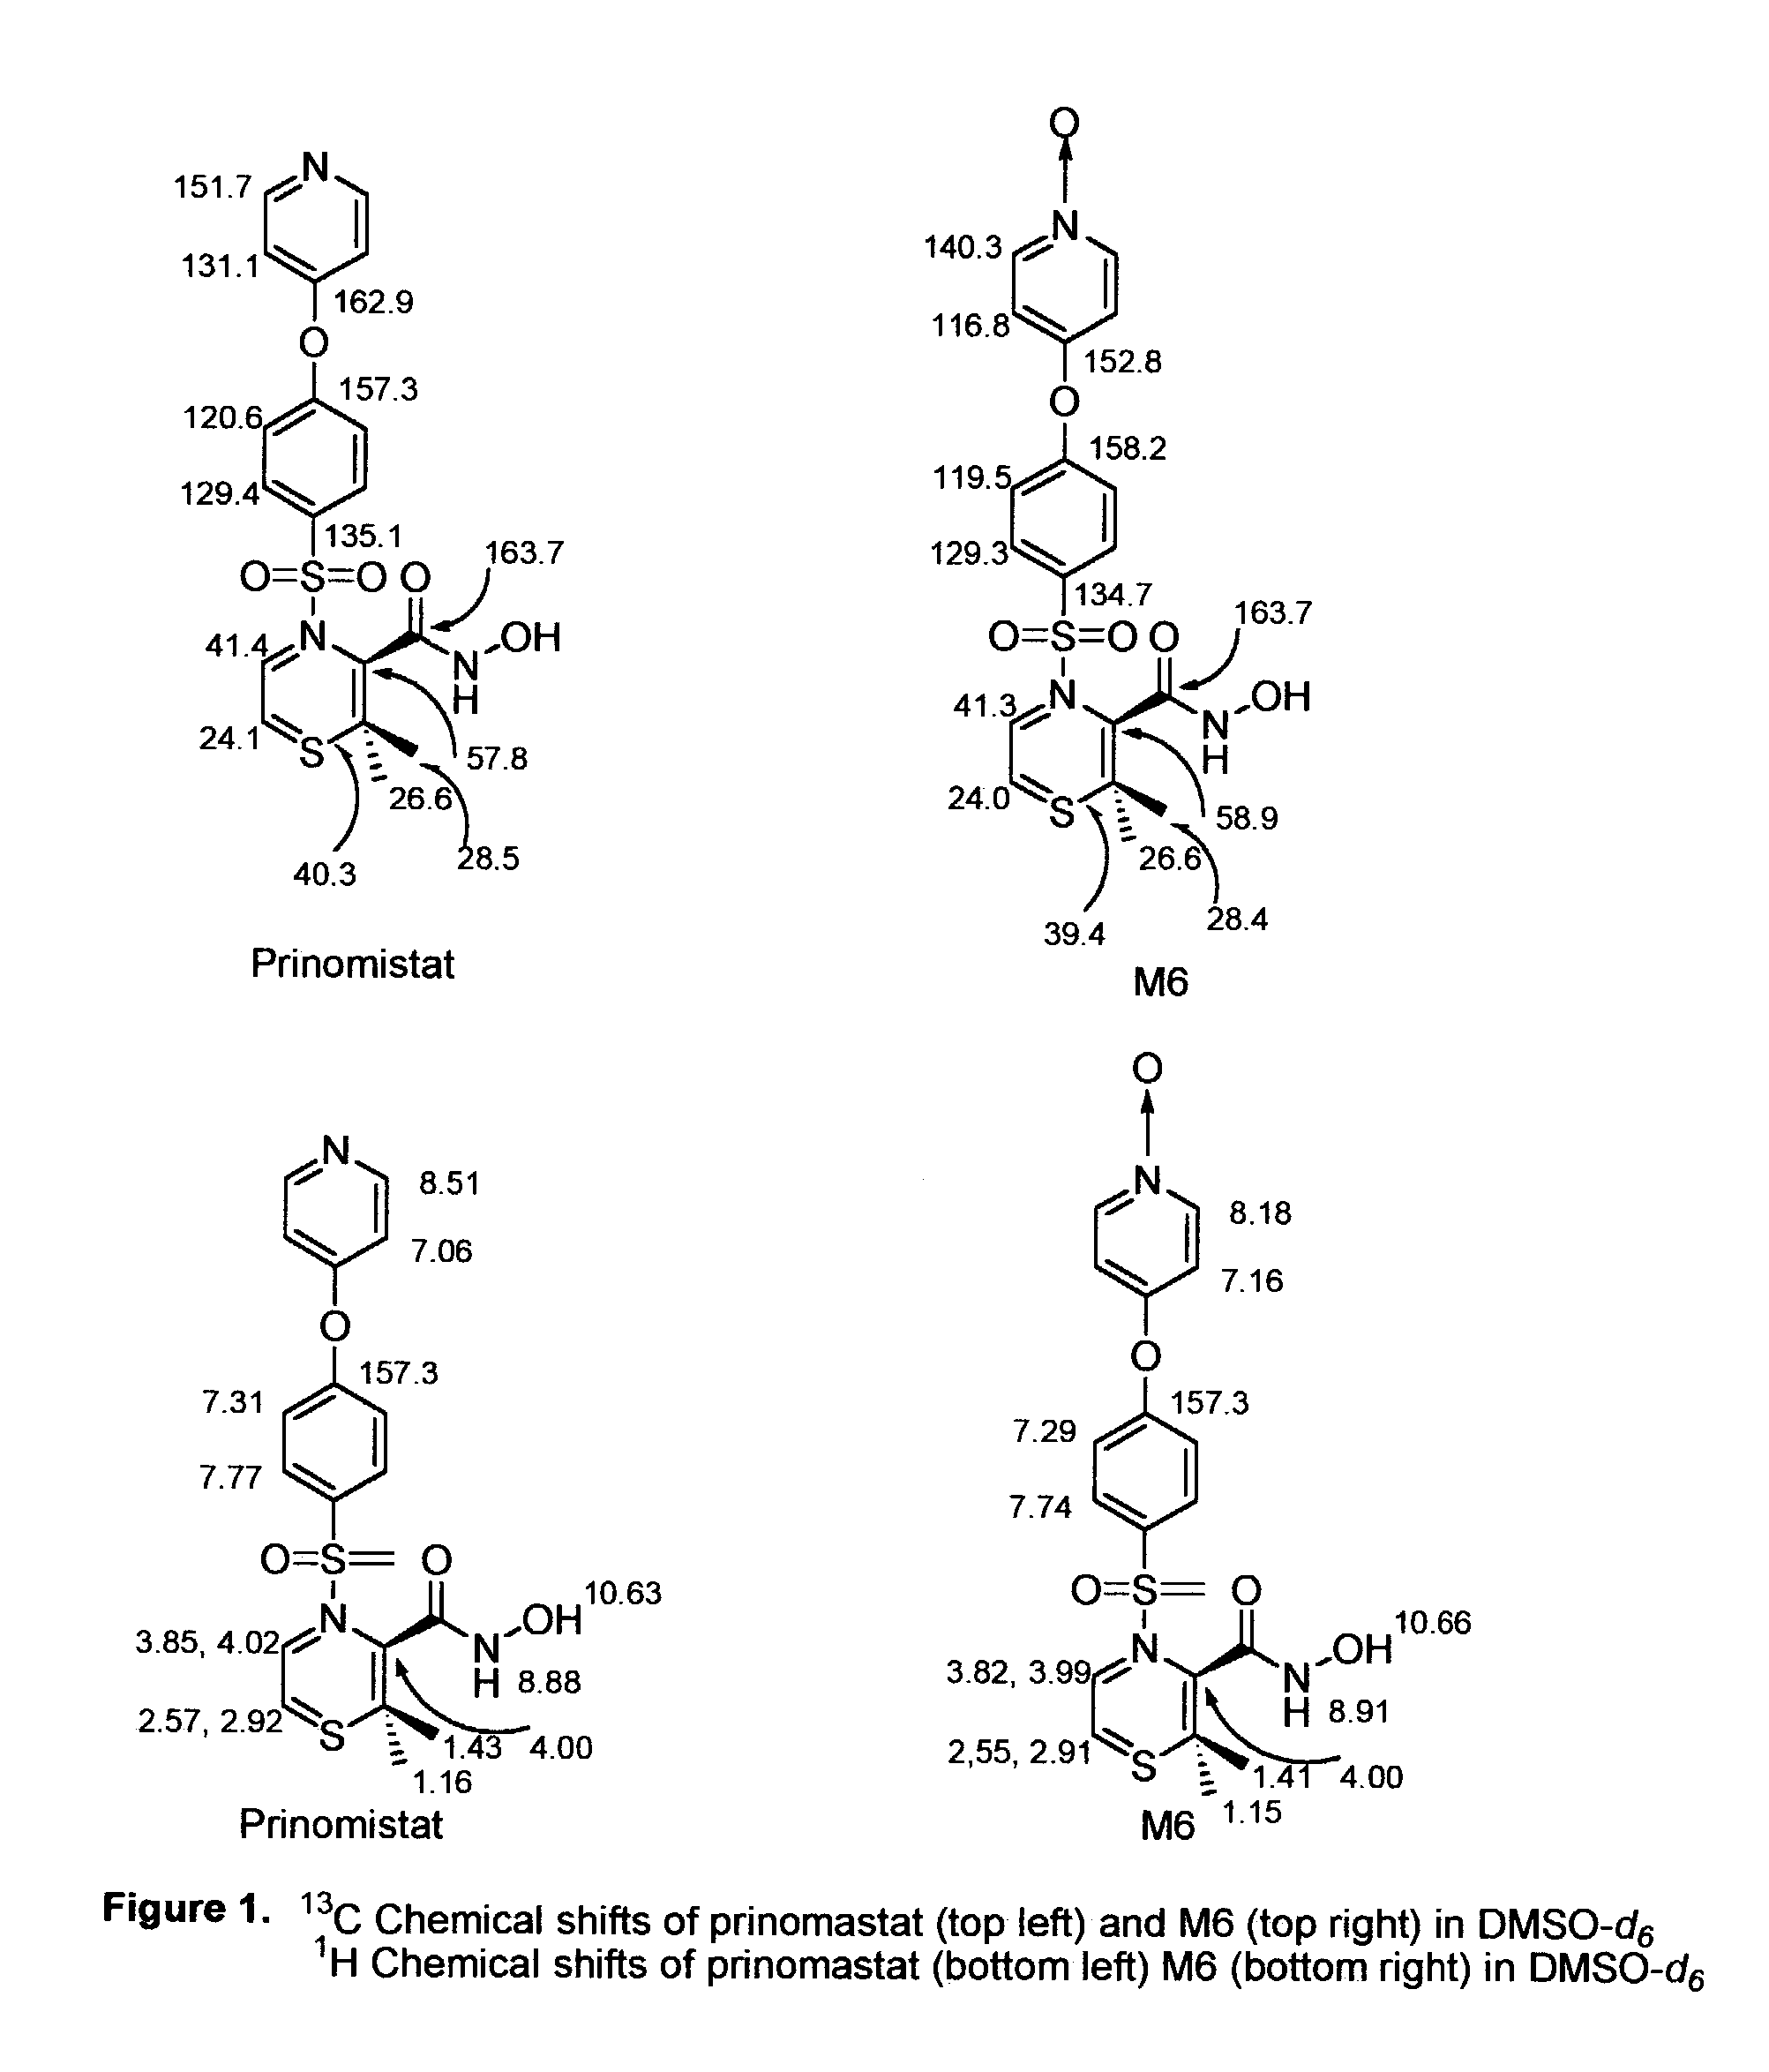 Metabolites of prinomastat and their synthesis